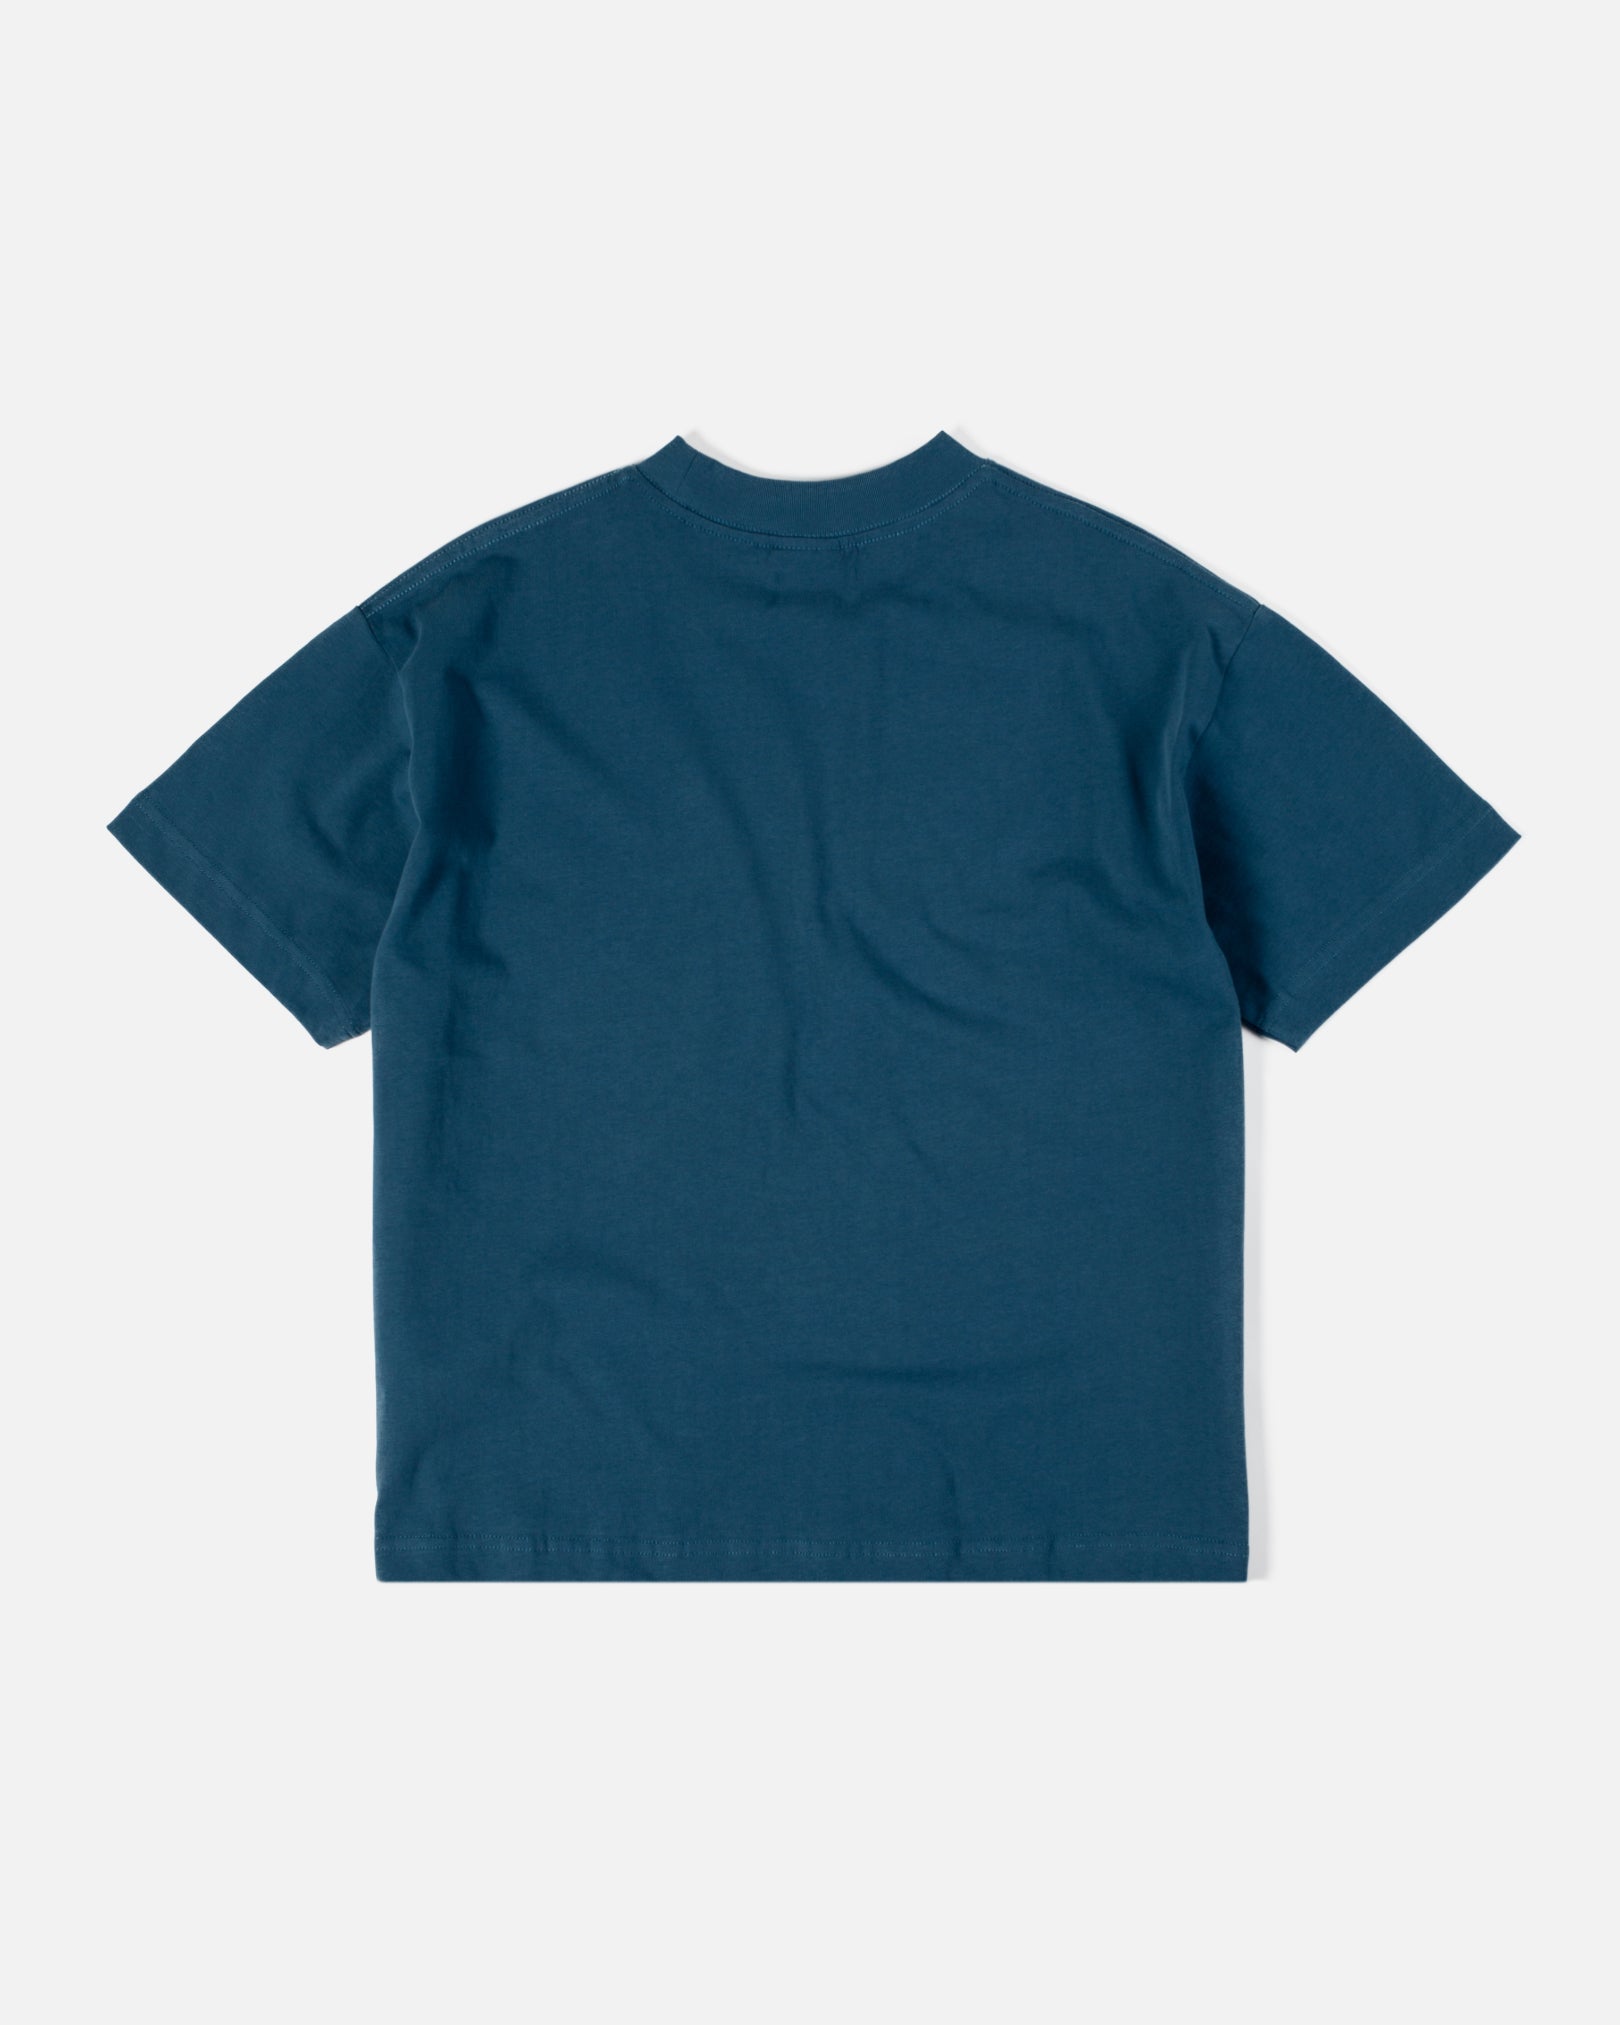 candice-boxy-tshirt-cult-blue-back